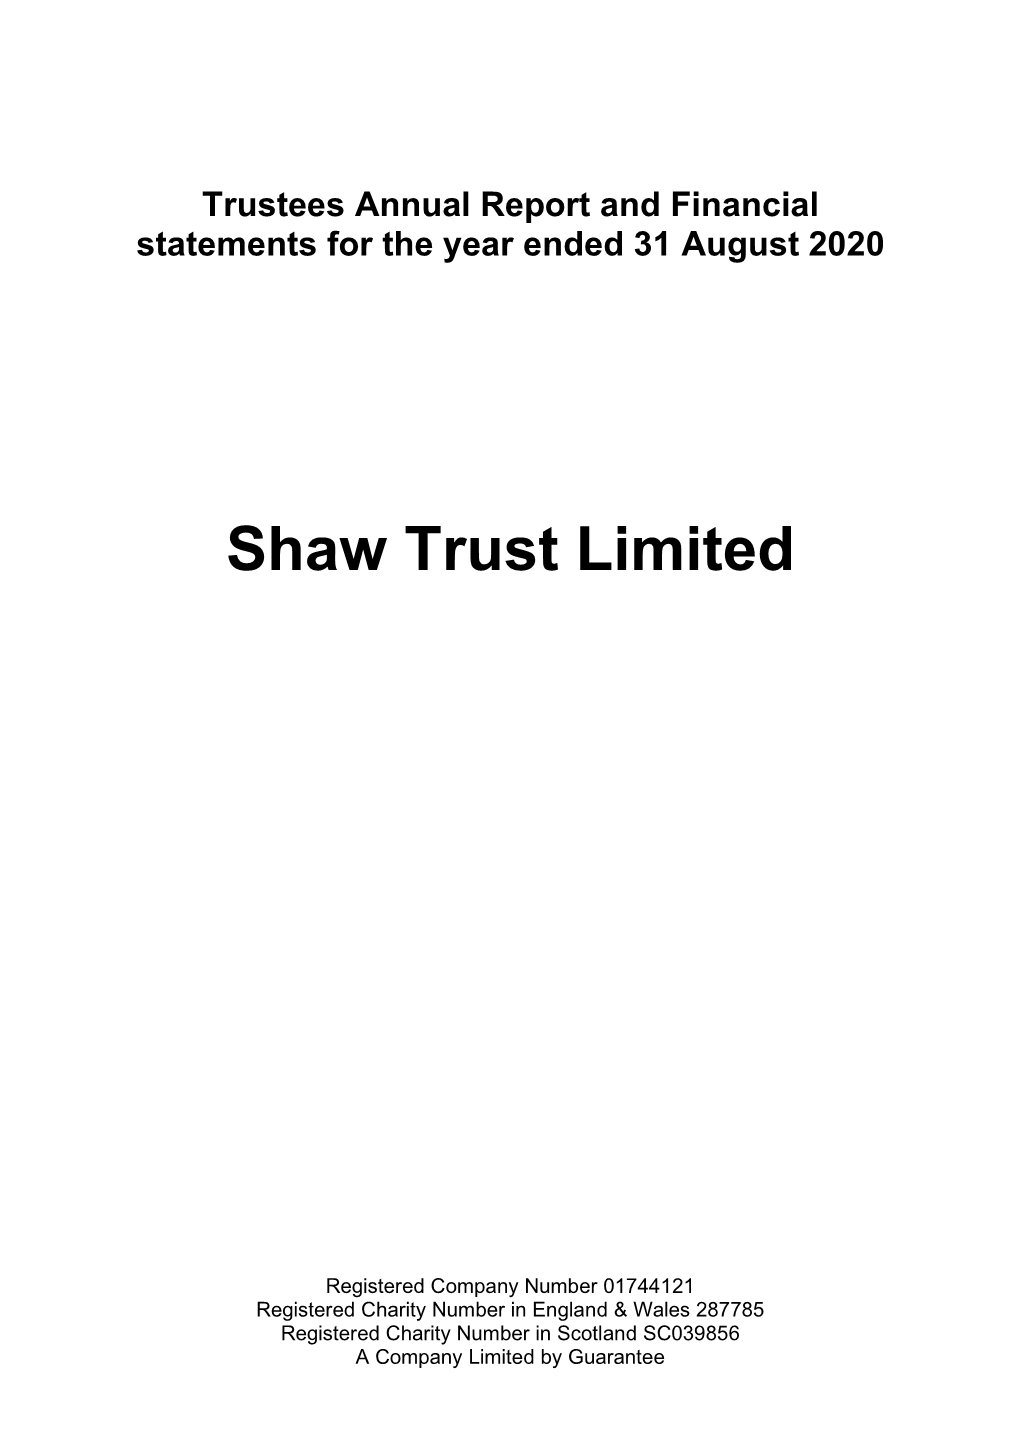 Shaw Trust Limited